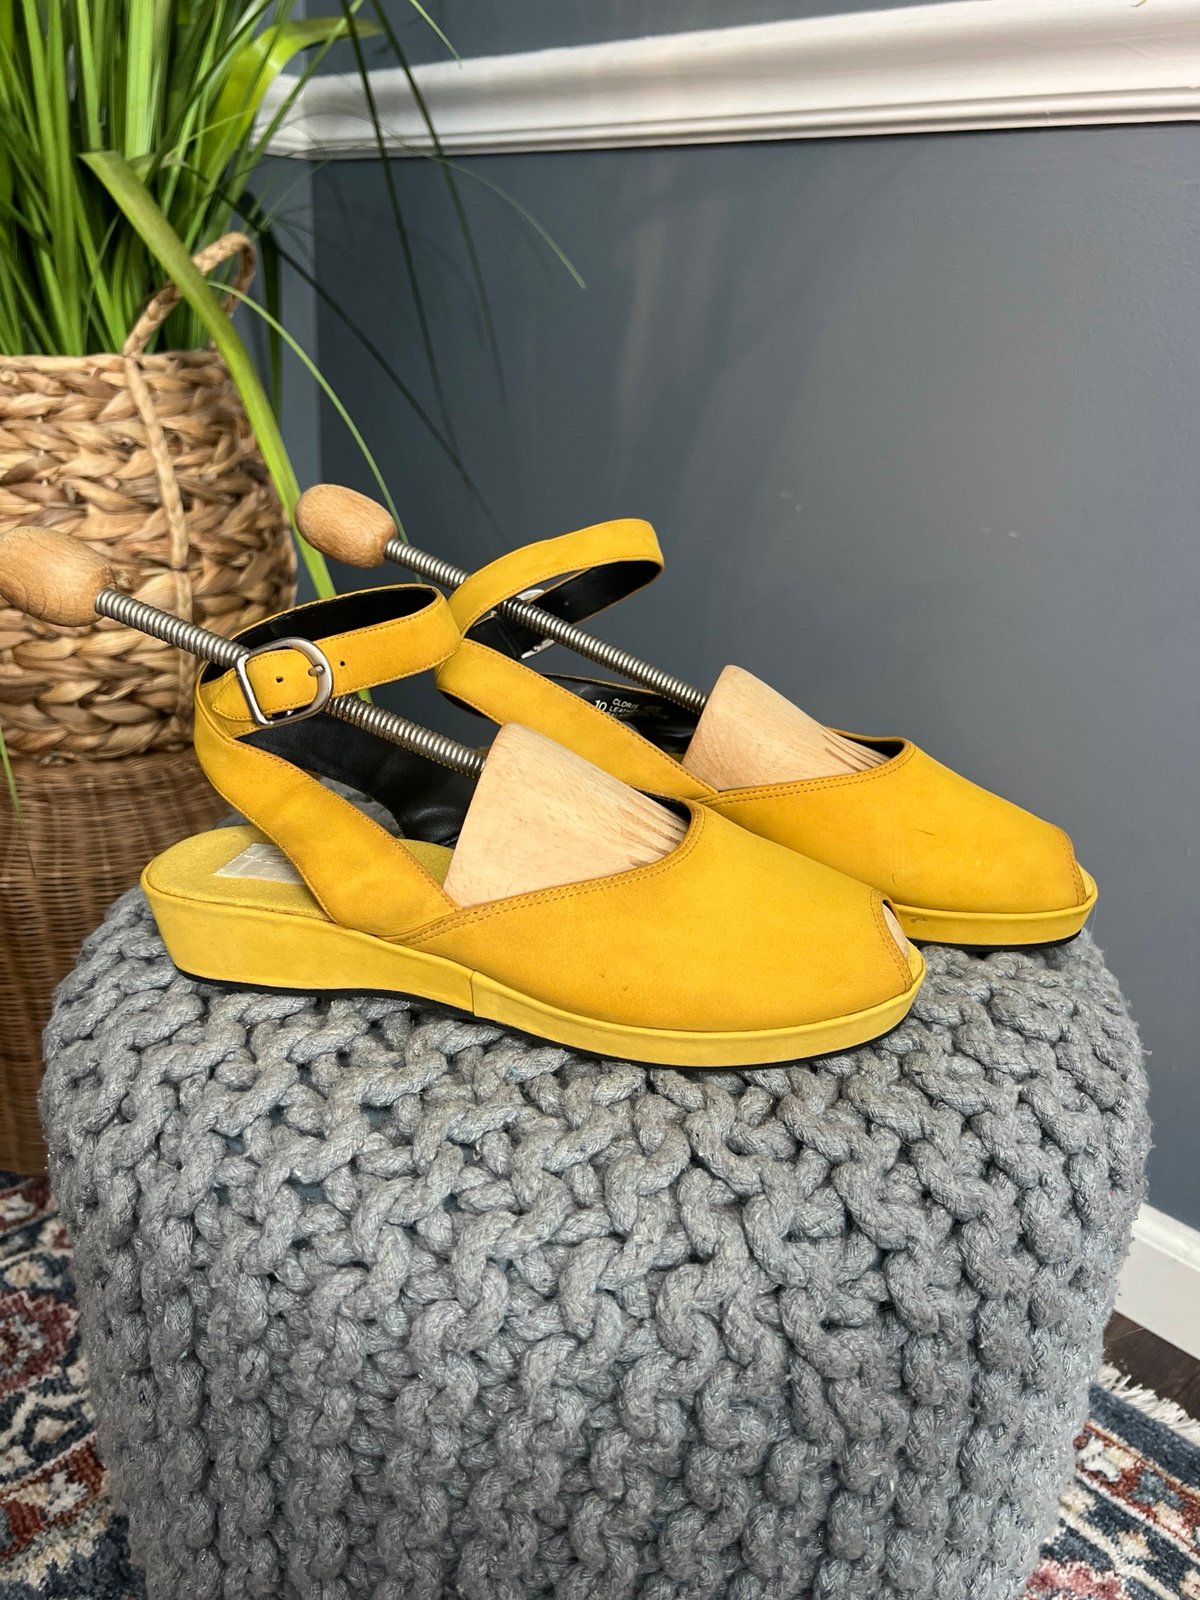 Vtg 80’s ESPIRT yellow leather open toe sandals size 10 nlpSixcMV